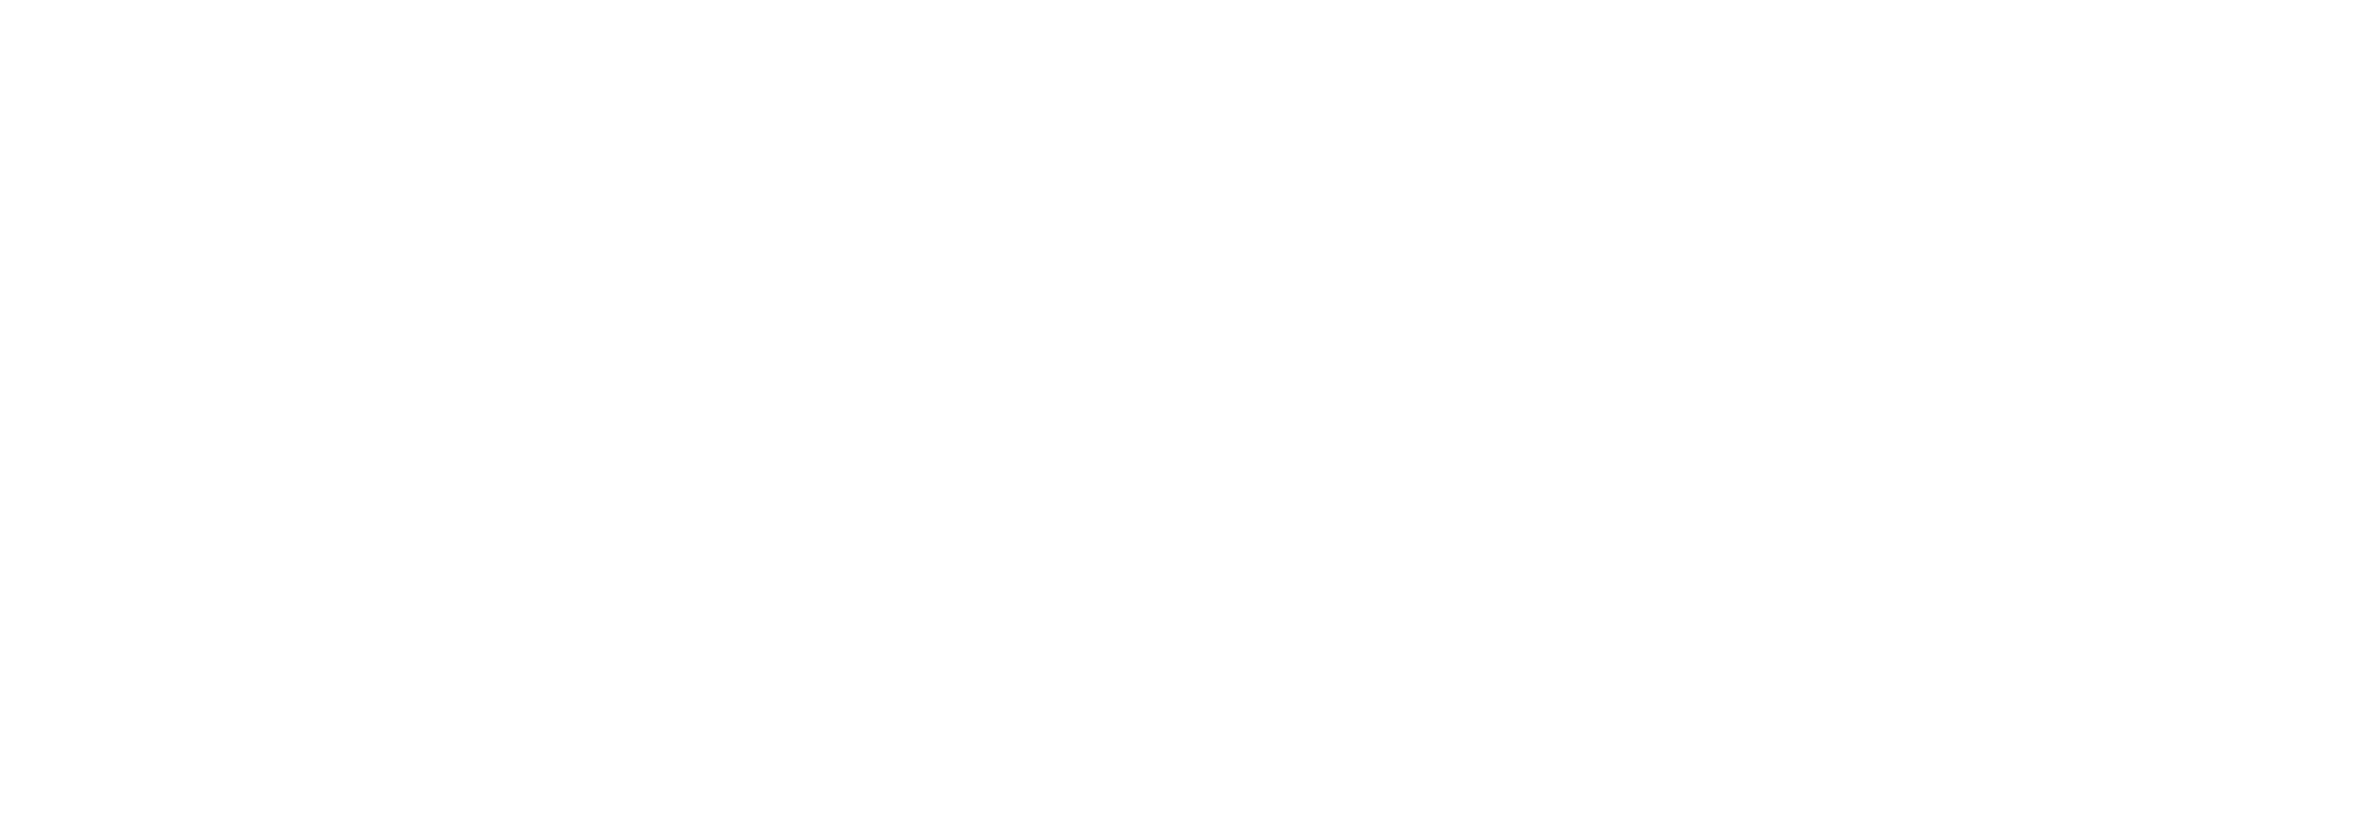 Uselesspride merch